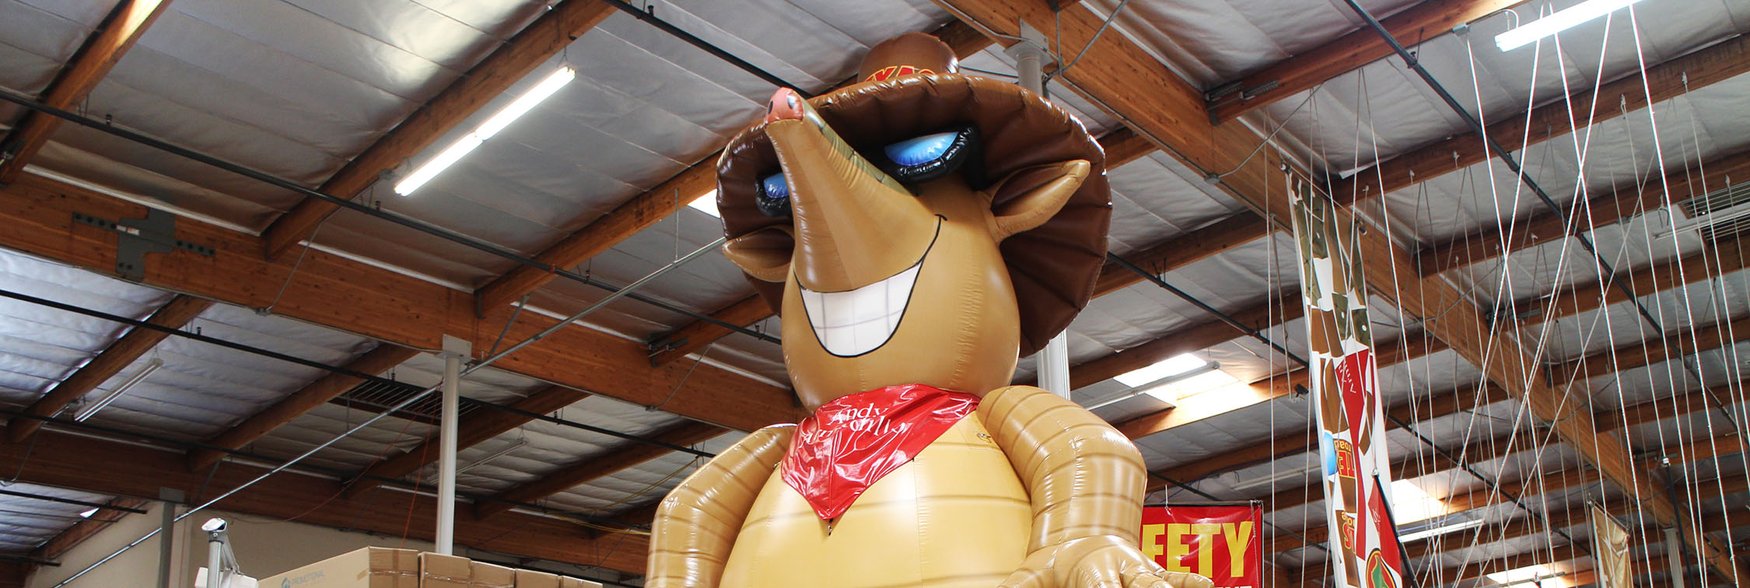 texas-roadhouse-armadillo-inflatable